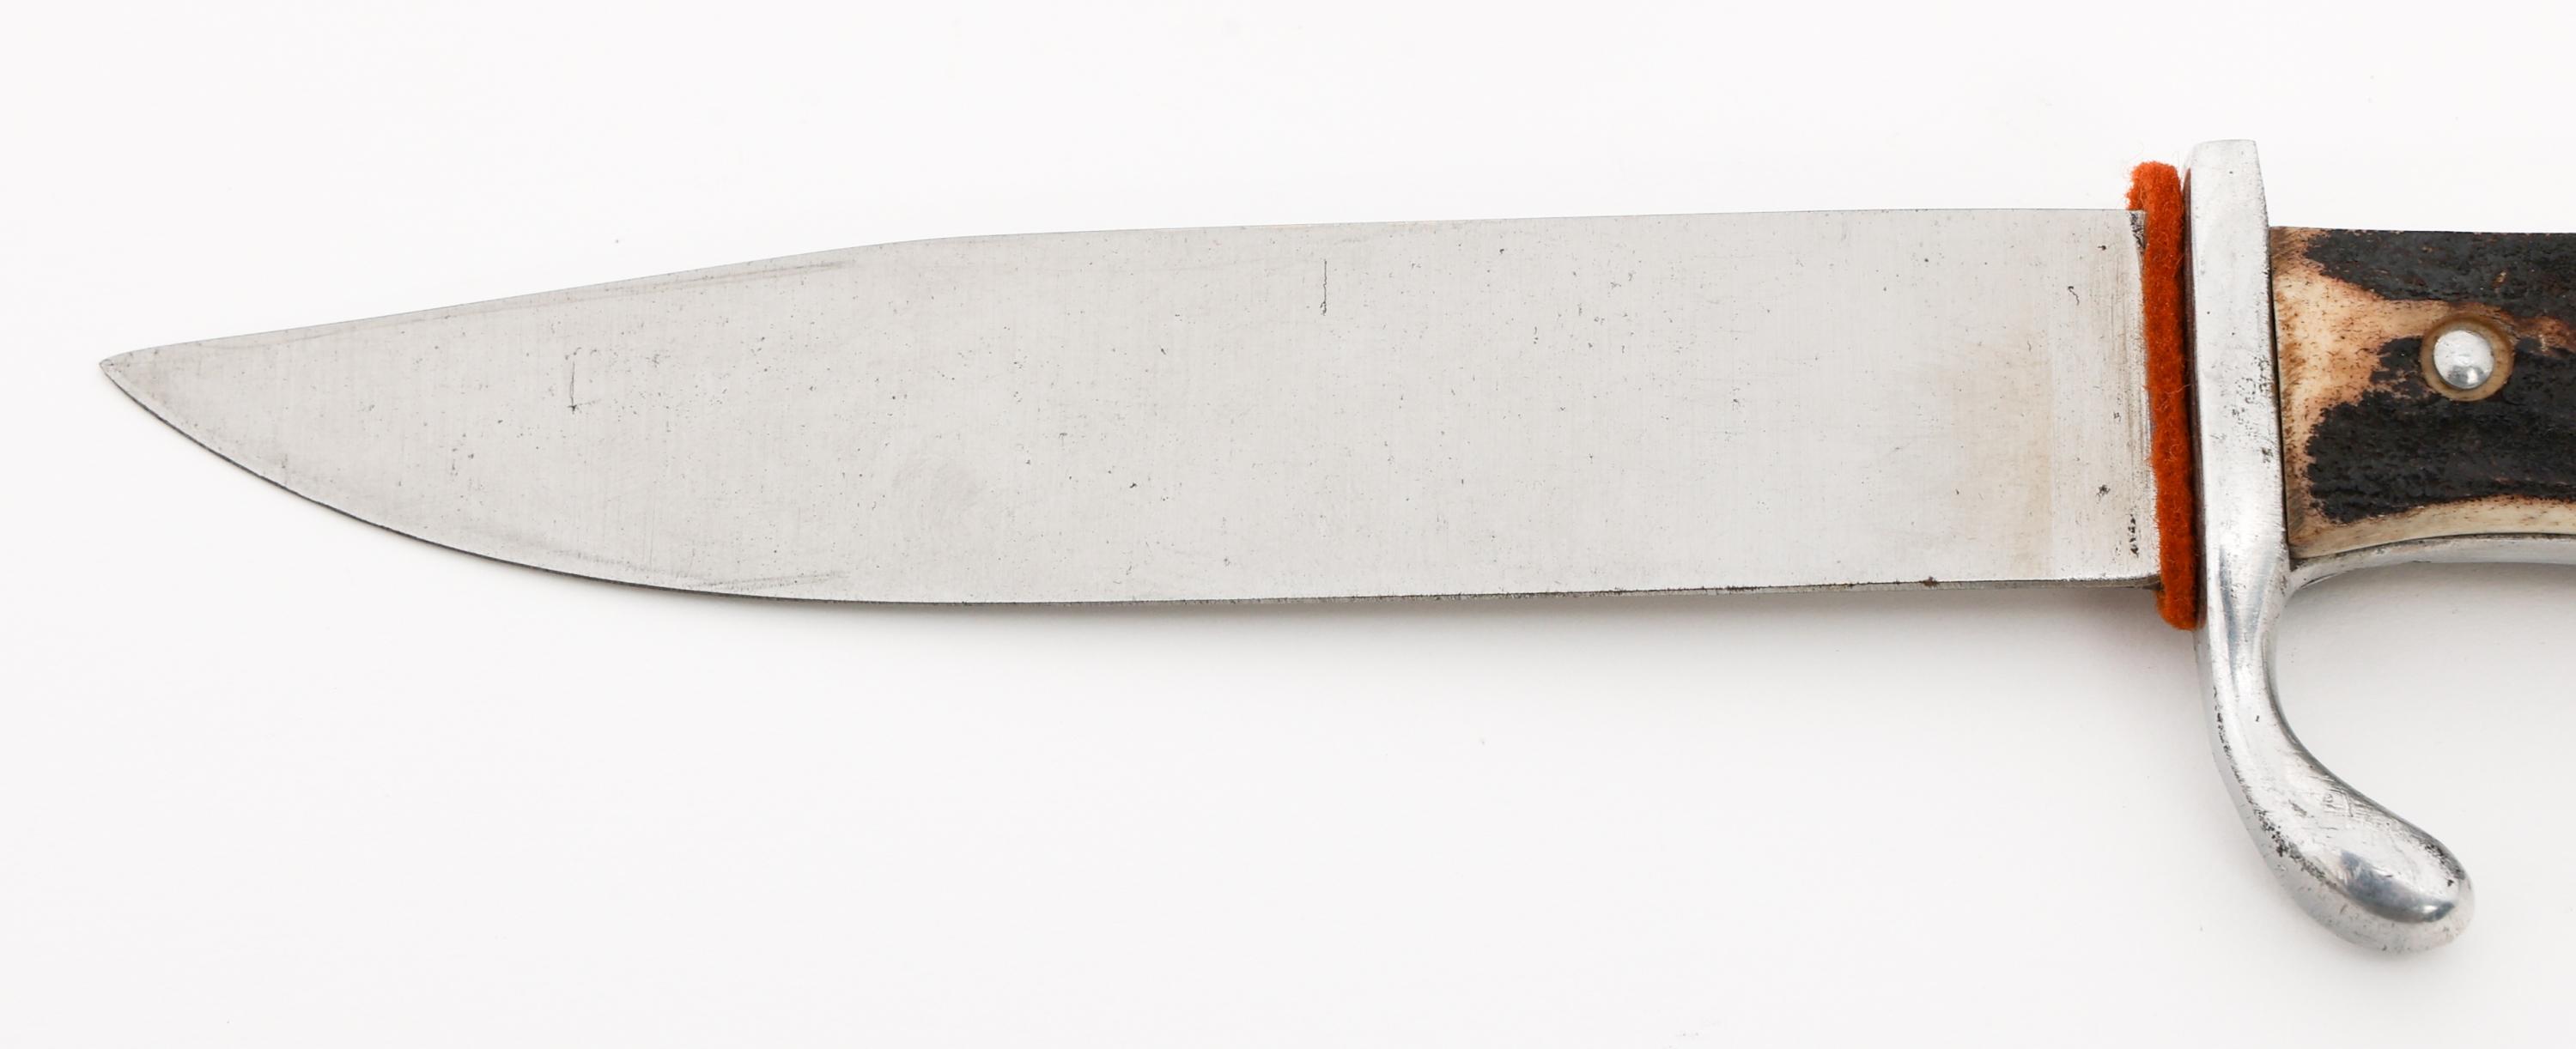 1935 NURNBERG RALLIES JUNGVOLK KNIFE WITH SCABBARD